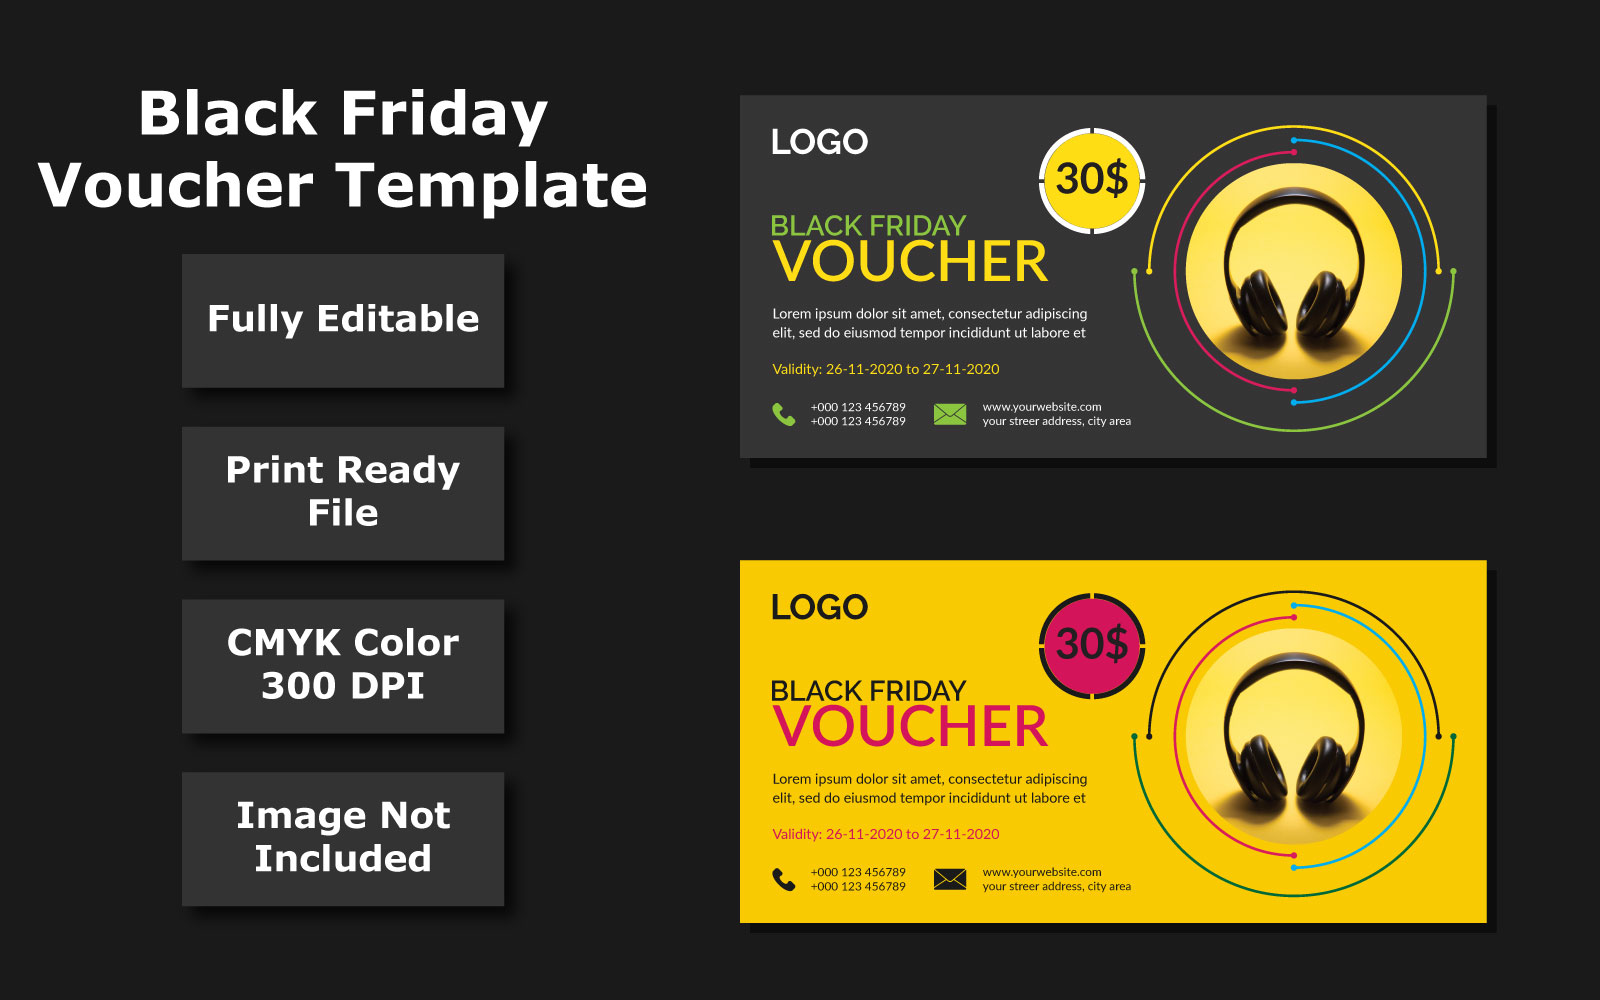 Black Friday Discount Voucher Template - Vector Image